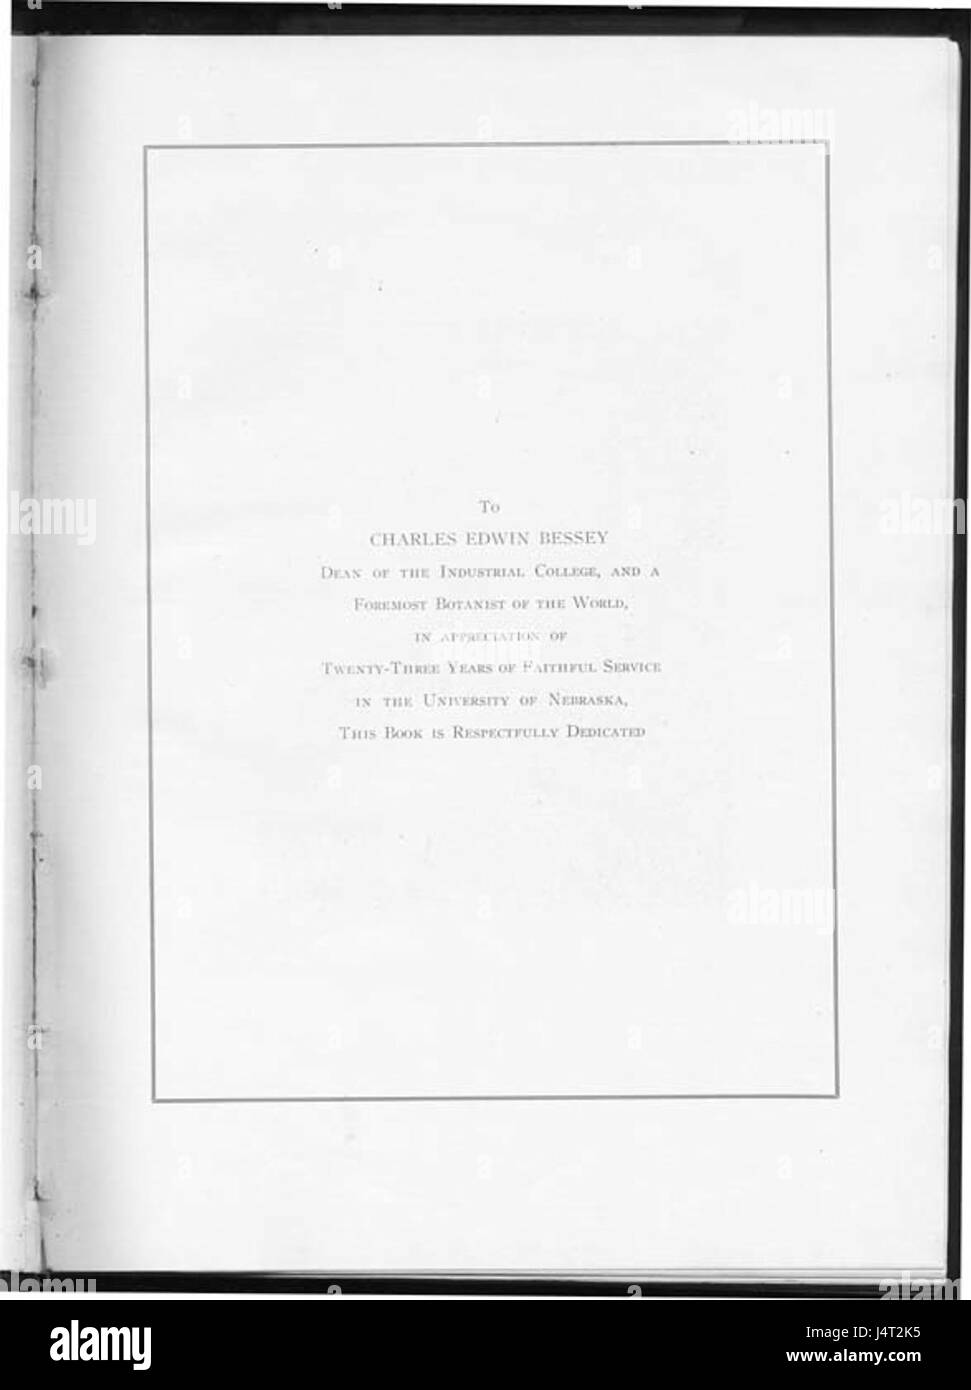 The Cornhusker, Volume 1, 1907 Dedication Text Stock Photo